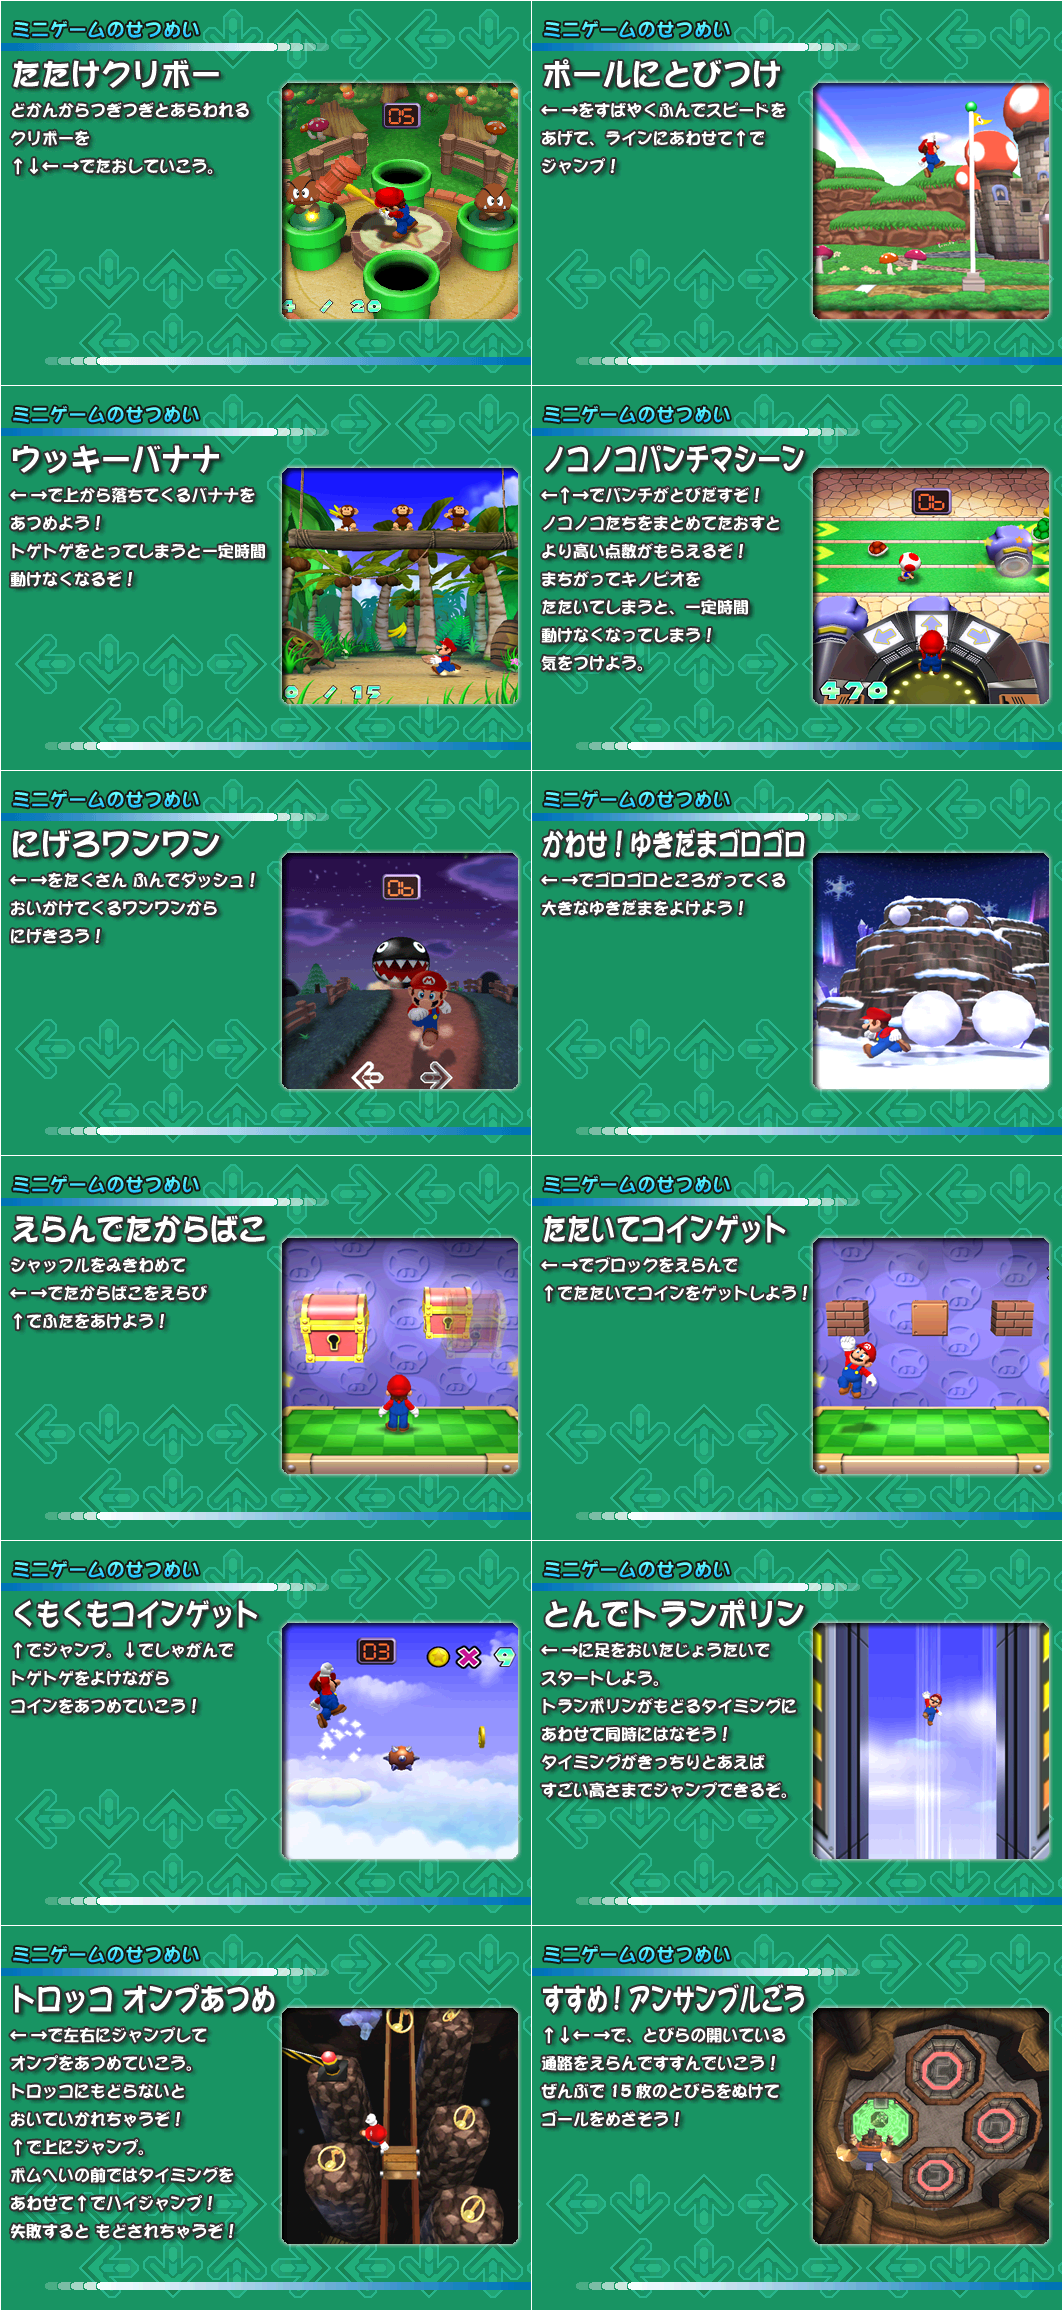 Dance Dance Revolution: Mario Mix - Minigame Instructions (Japanese)